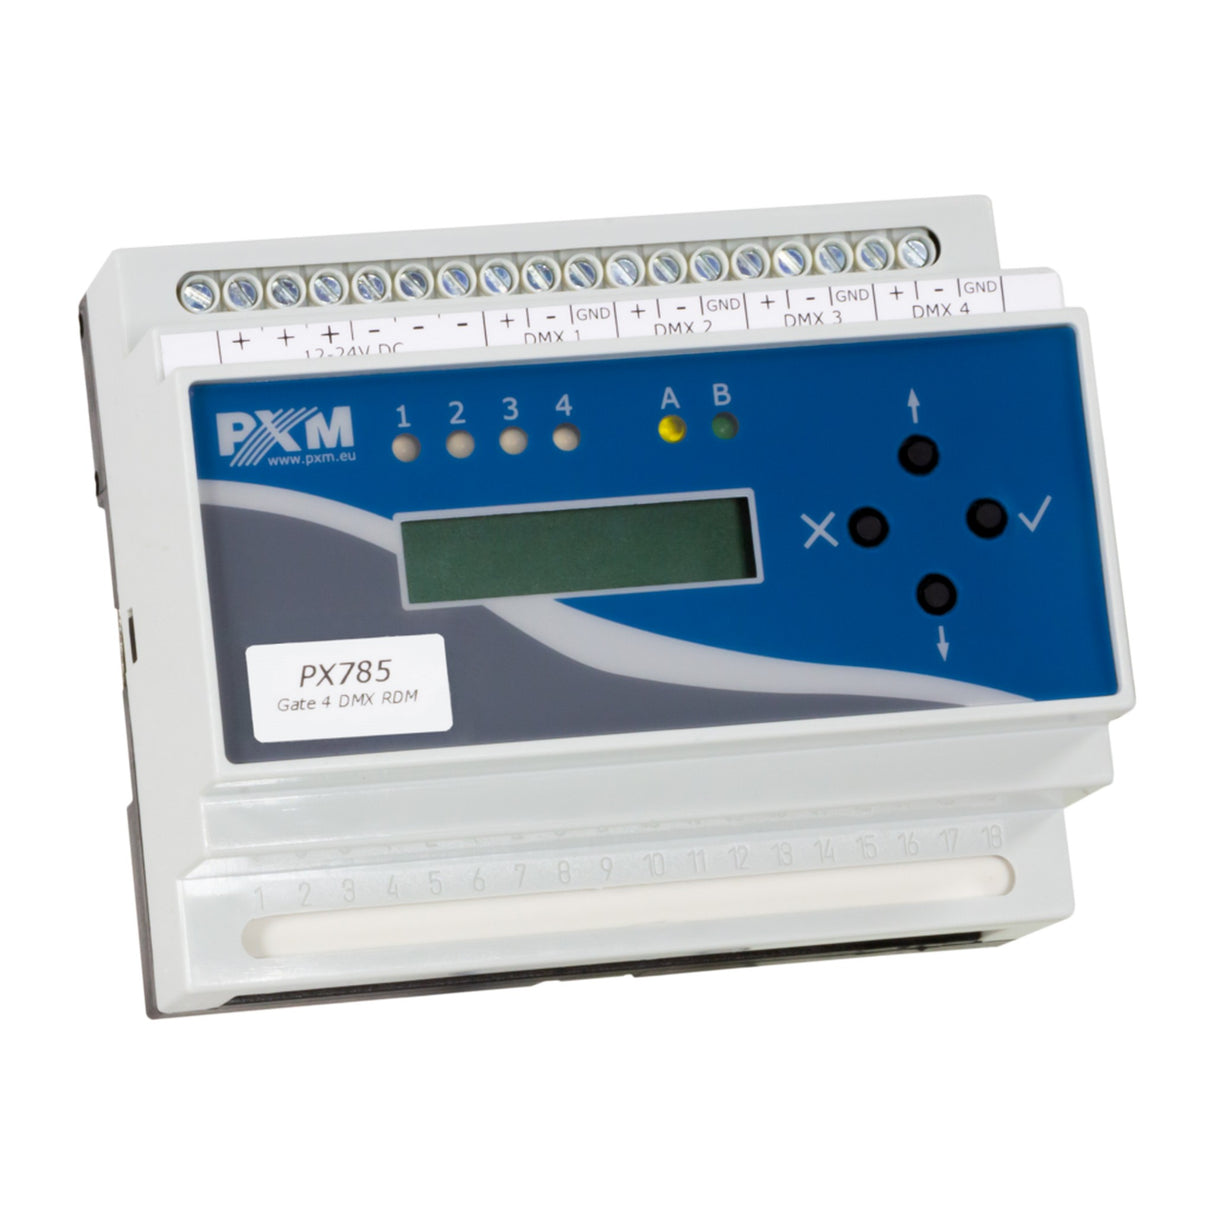 PXM PX785 Gate 4 DMX-RDM ArtNet Interface with Display